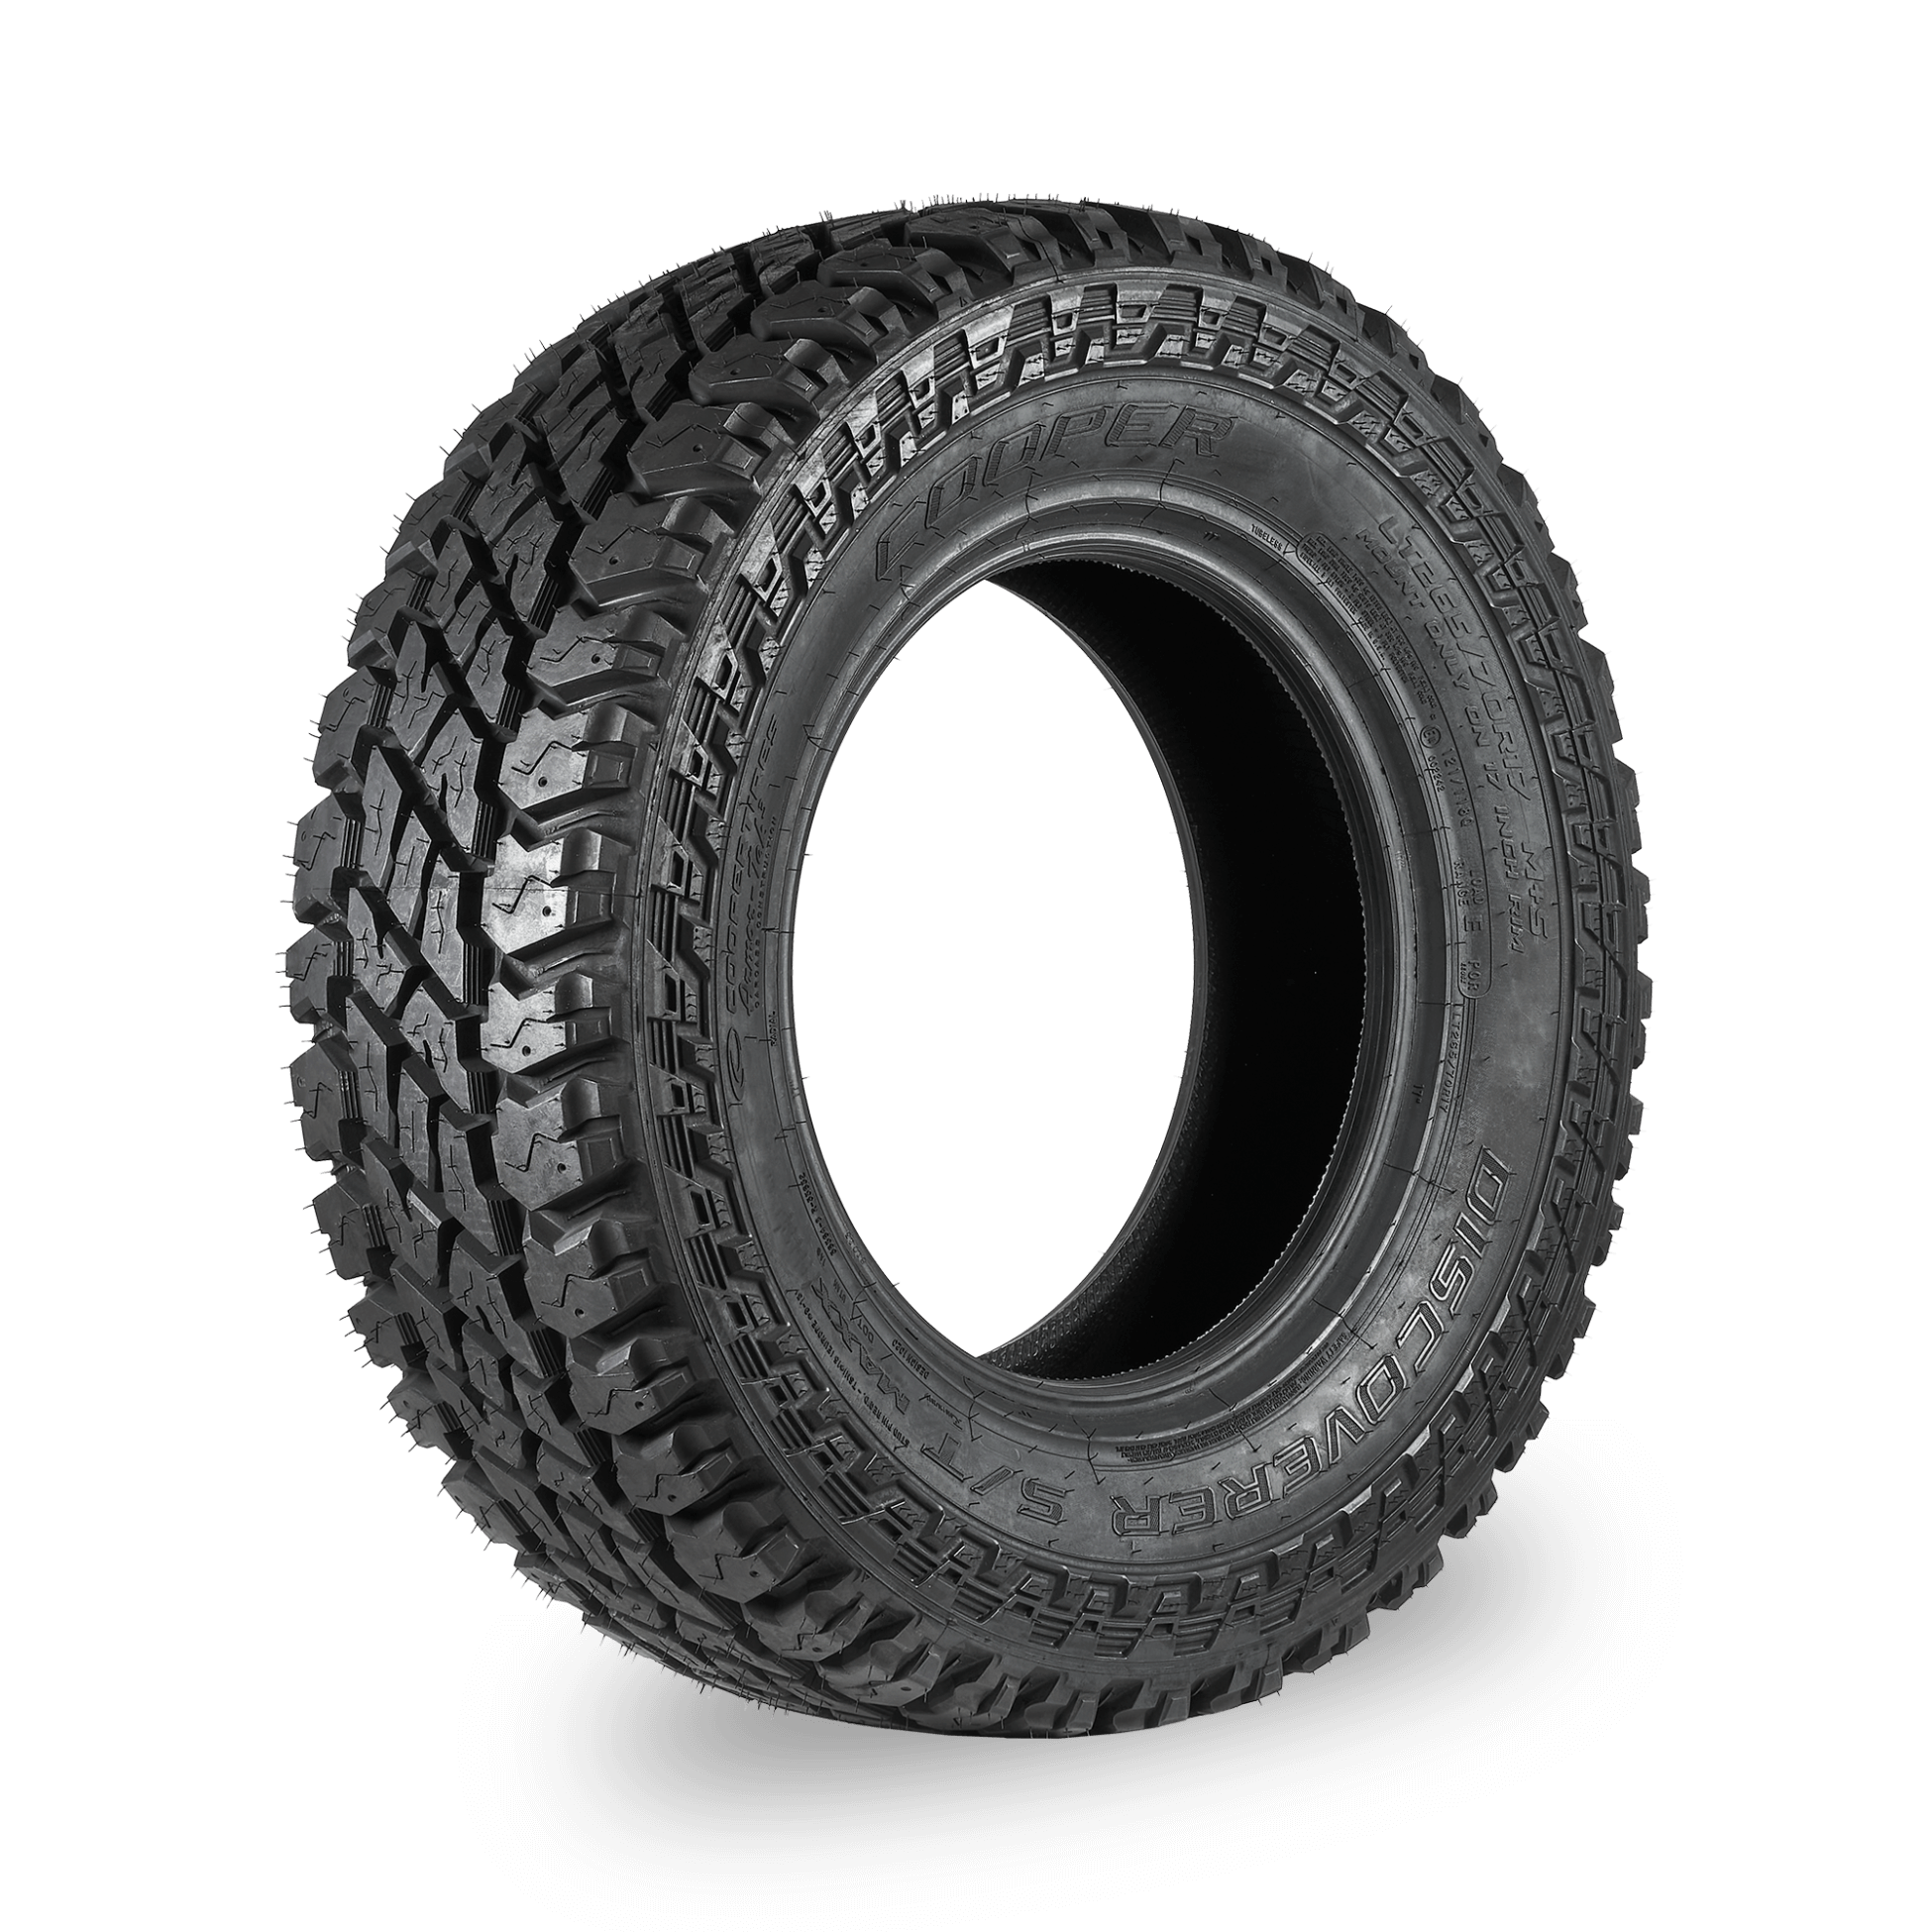 265/70R17 121Q Cooper Discoverer ST Maxx Mud Terrain Radial Tire 